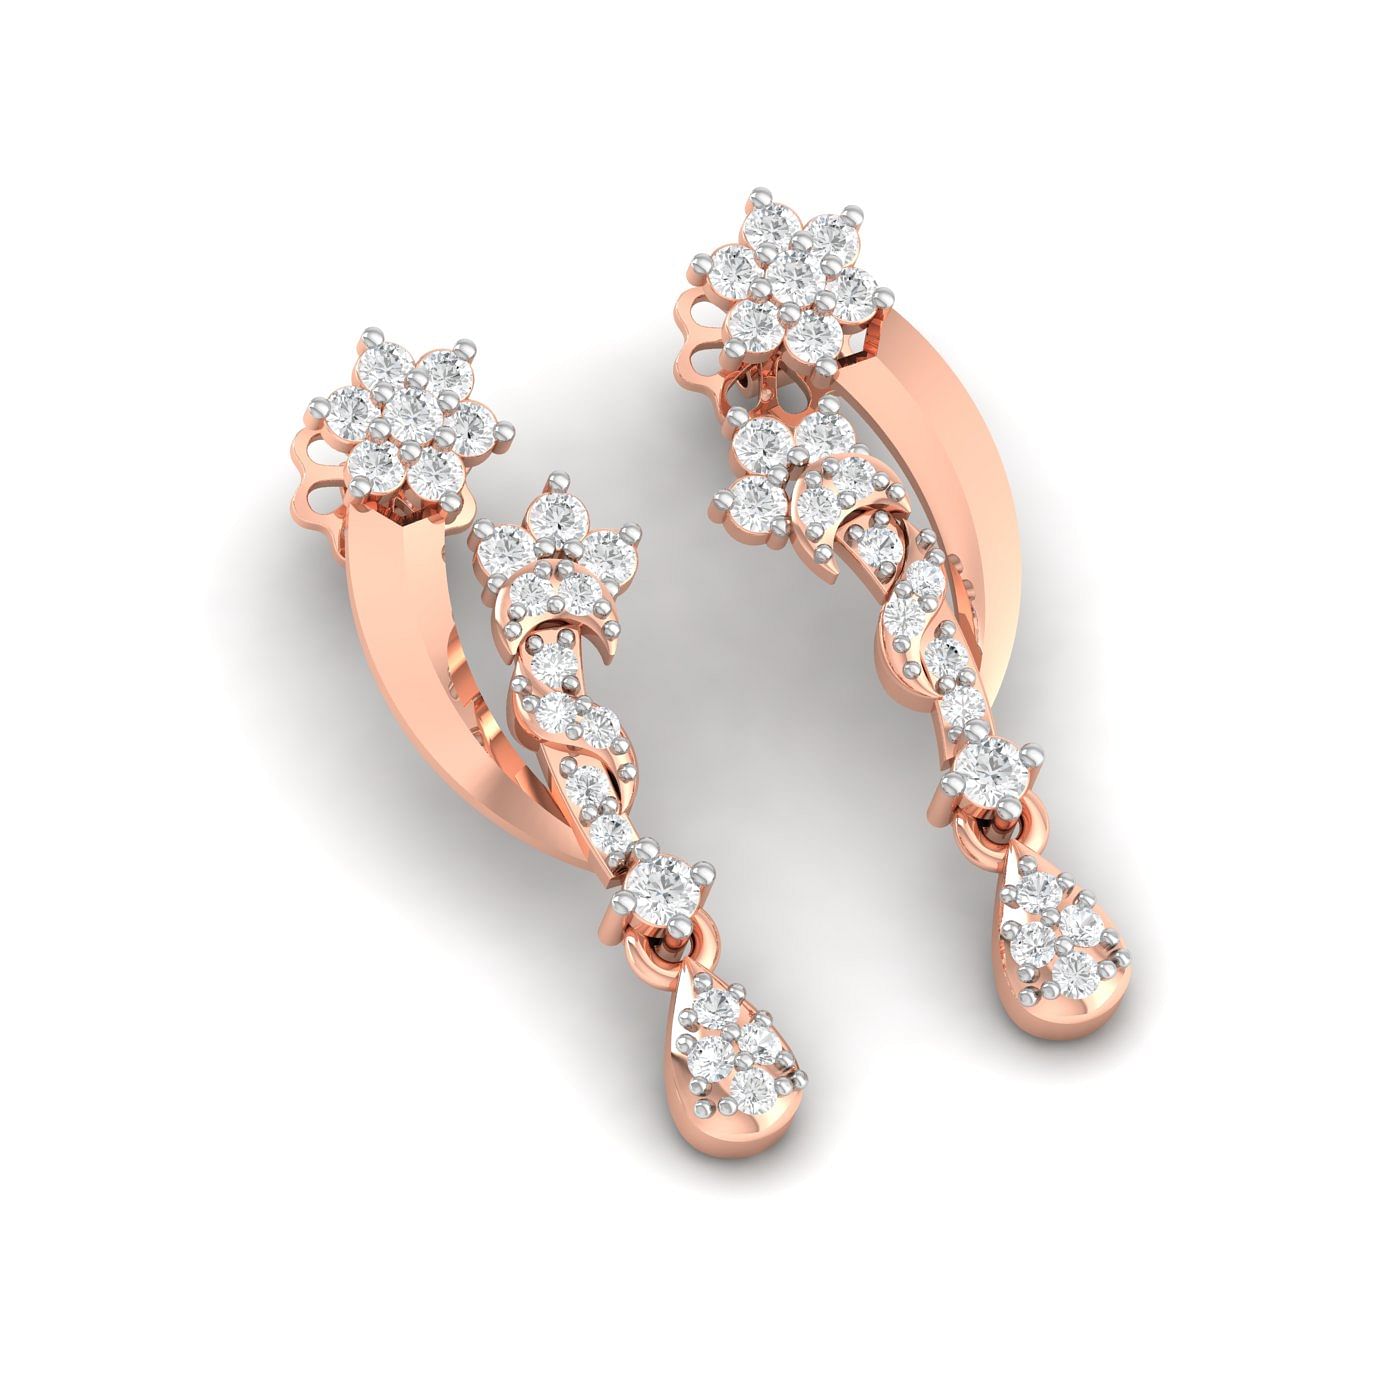 Small drop stud diamond earring in rose gold